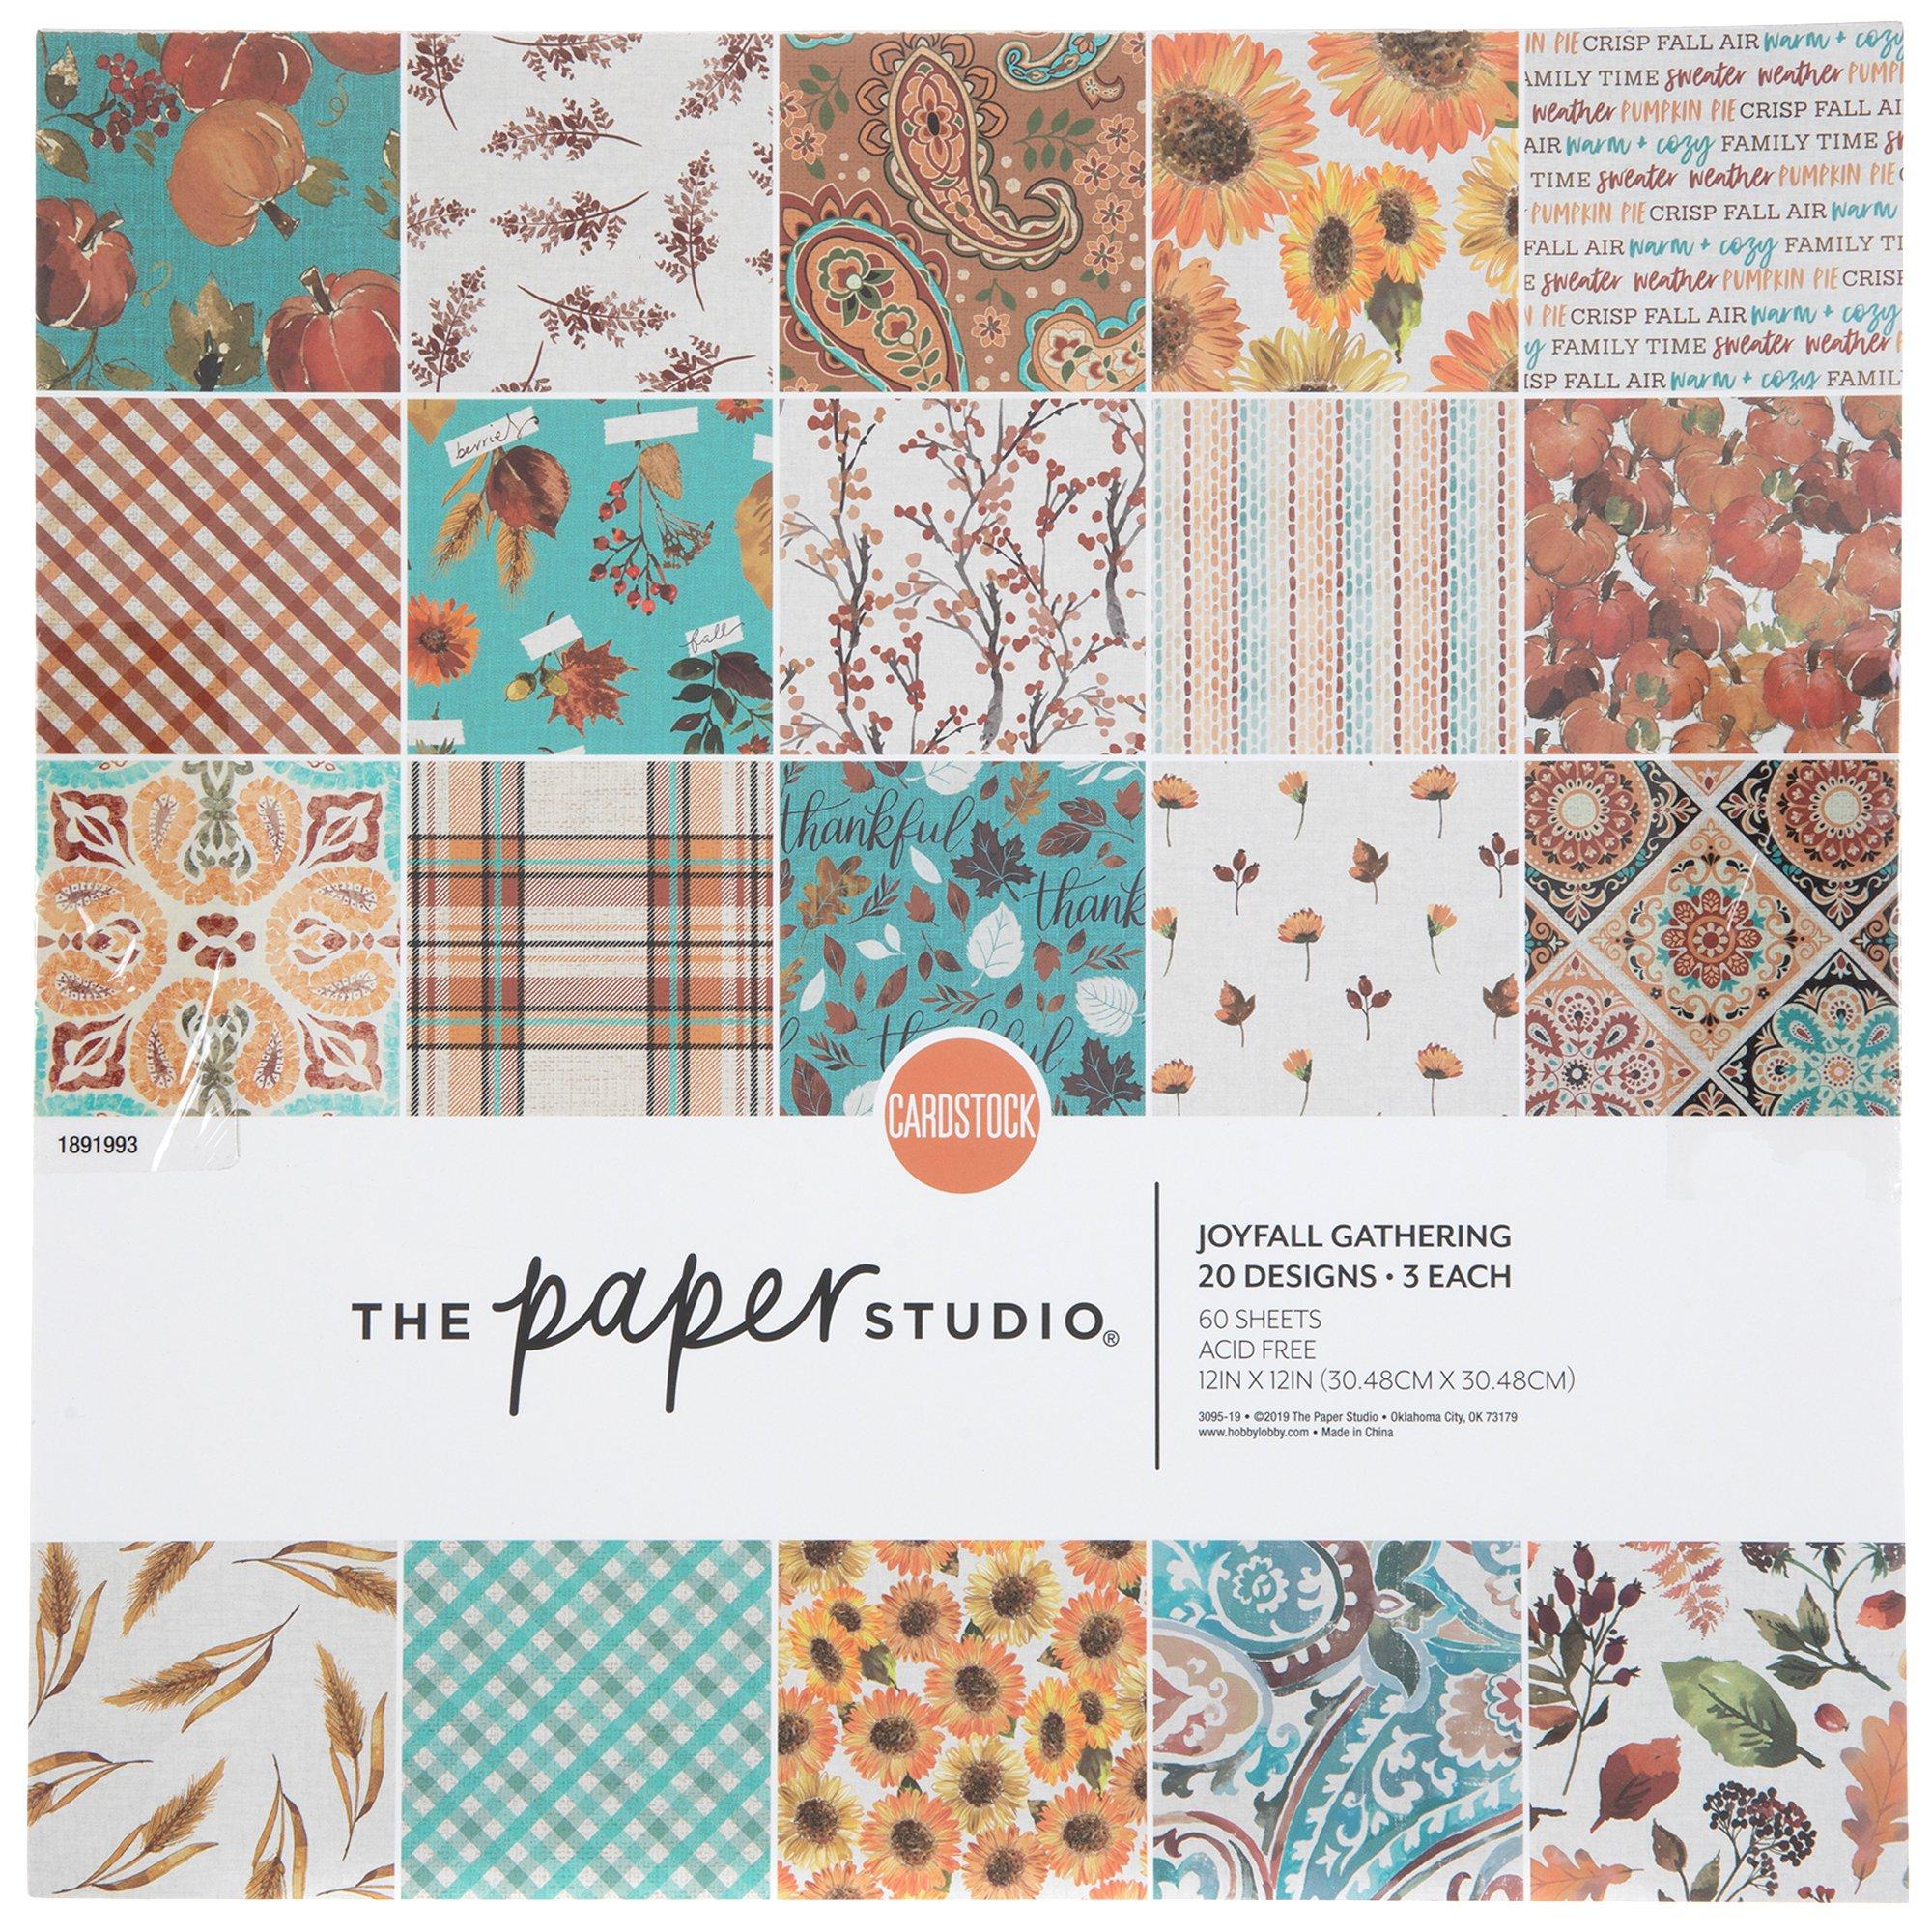 The Paper Studio-Affinity Textured 12 x 12 Cardstock Harvest